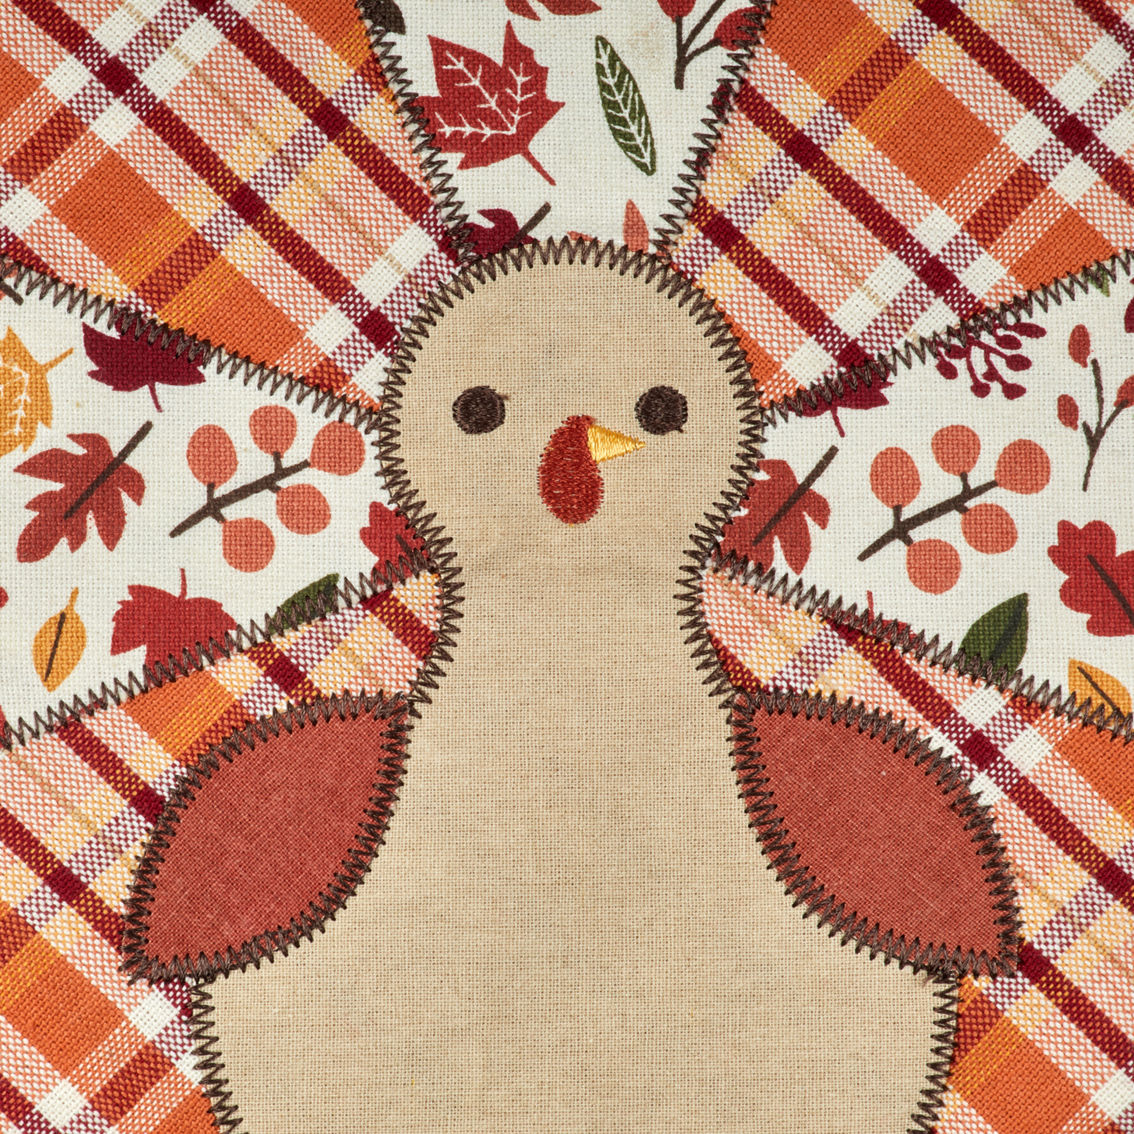 Design Imports Thanksgiving Gobble Turkey 3 pc. Potholder Gift Set - Image 6 of 10